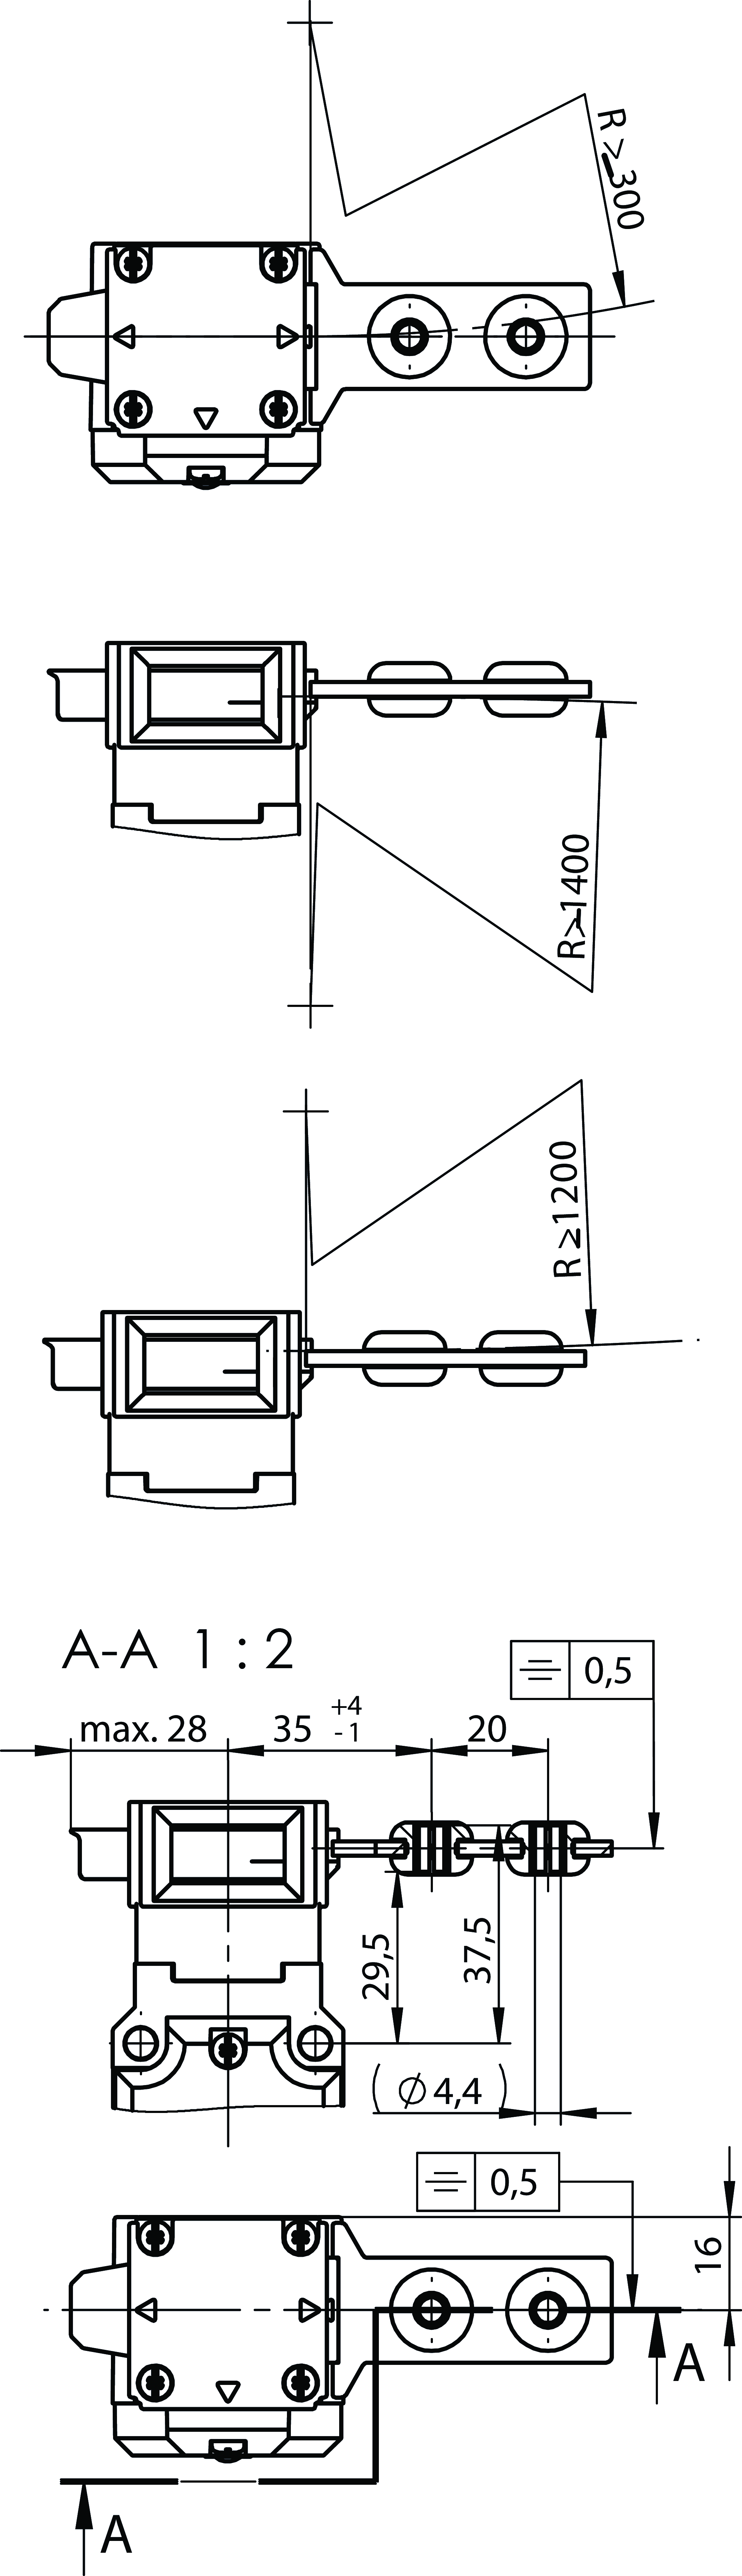 A-C-H-G-SST-126015 (Order no. 126015) | EUCHNER